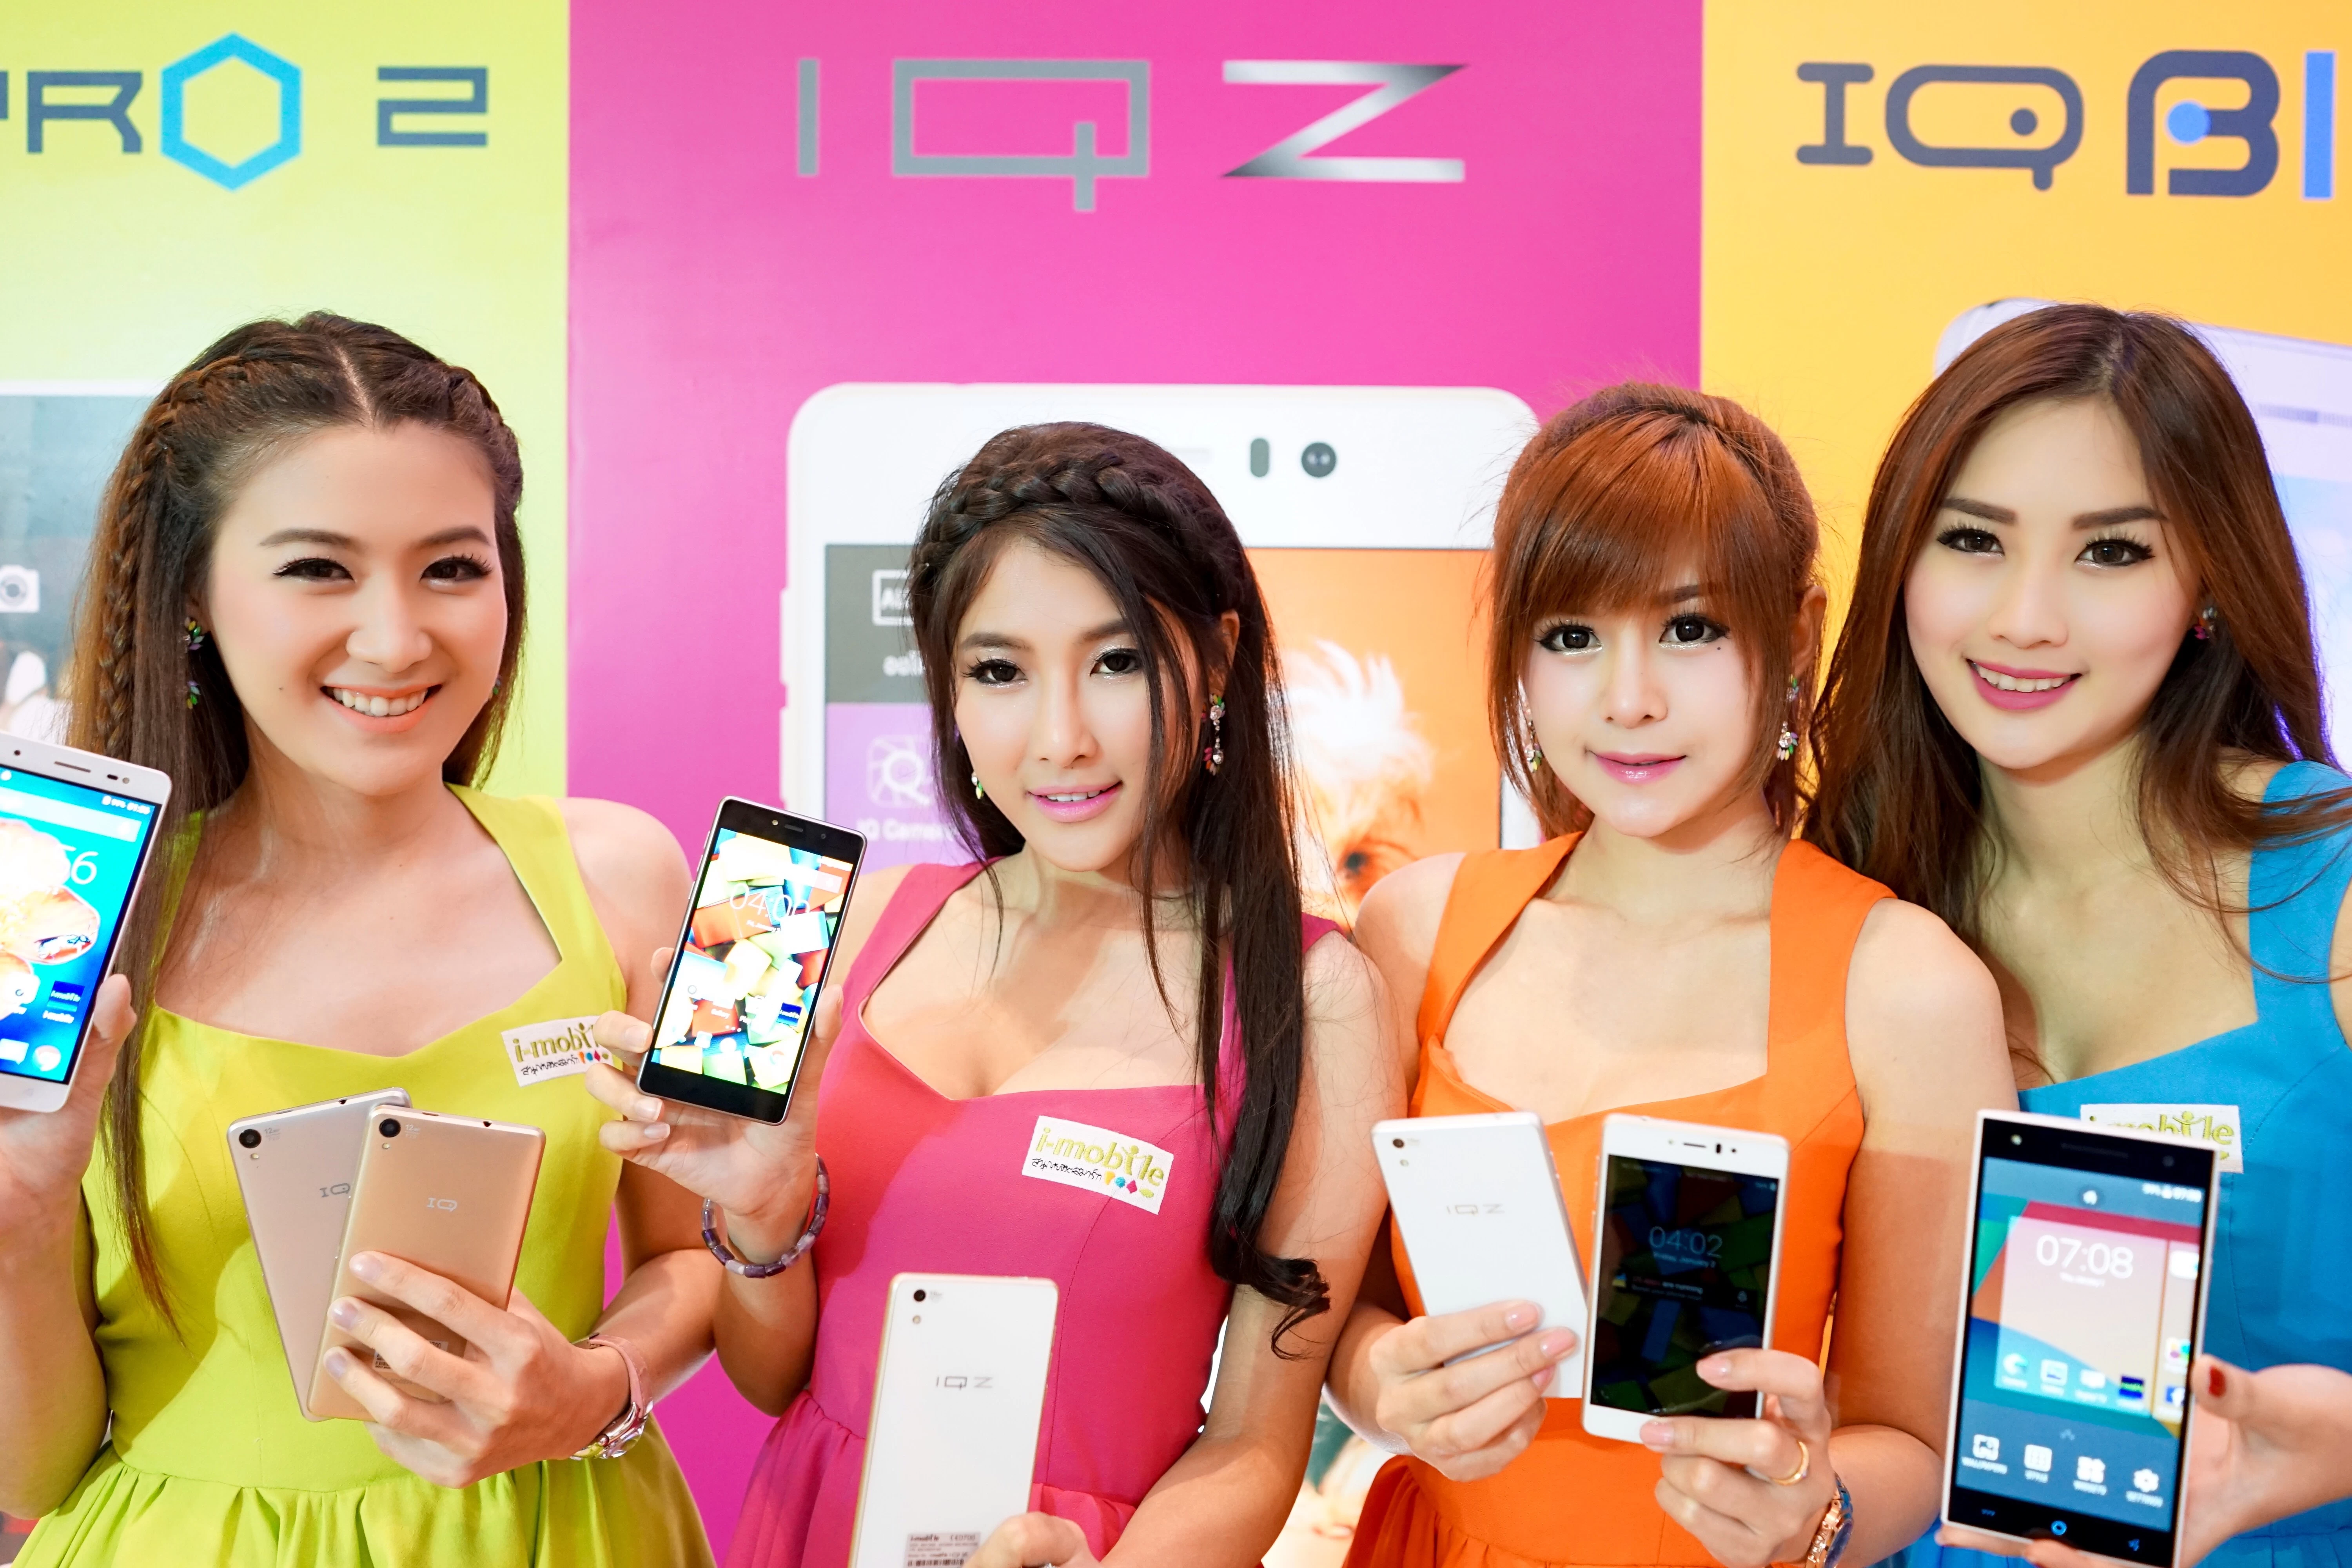 image14 | IQ X PRO2 | I Mobile เปิดสามตัวมหัศจรรย์ IQ BIG 2, IQ Z, IQ X PRO2 สมาร์ทโฟน Android กล้องหลังความละเอียด 30 ล้าน